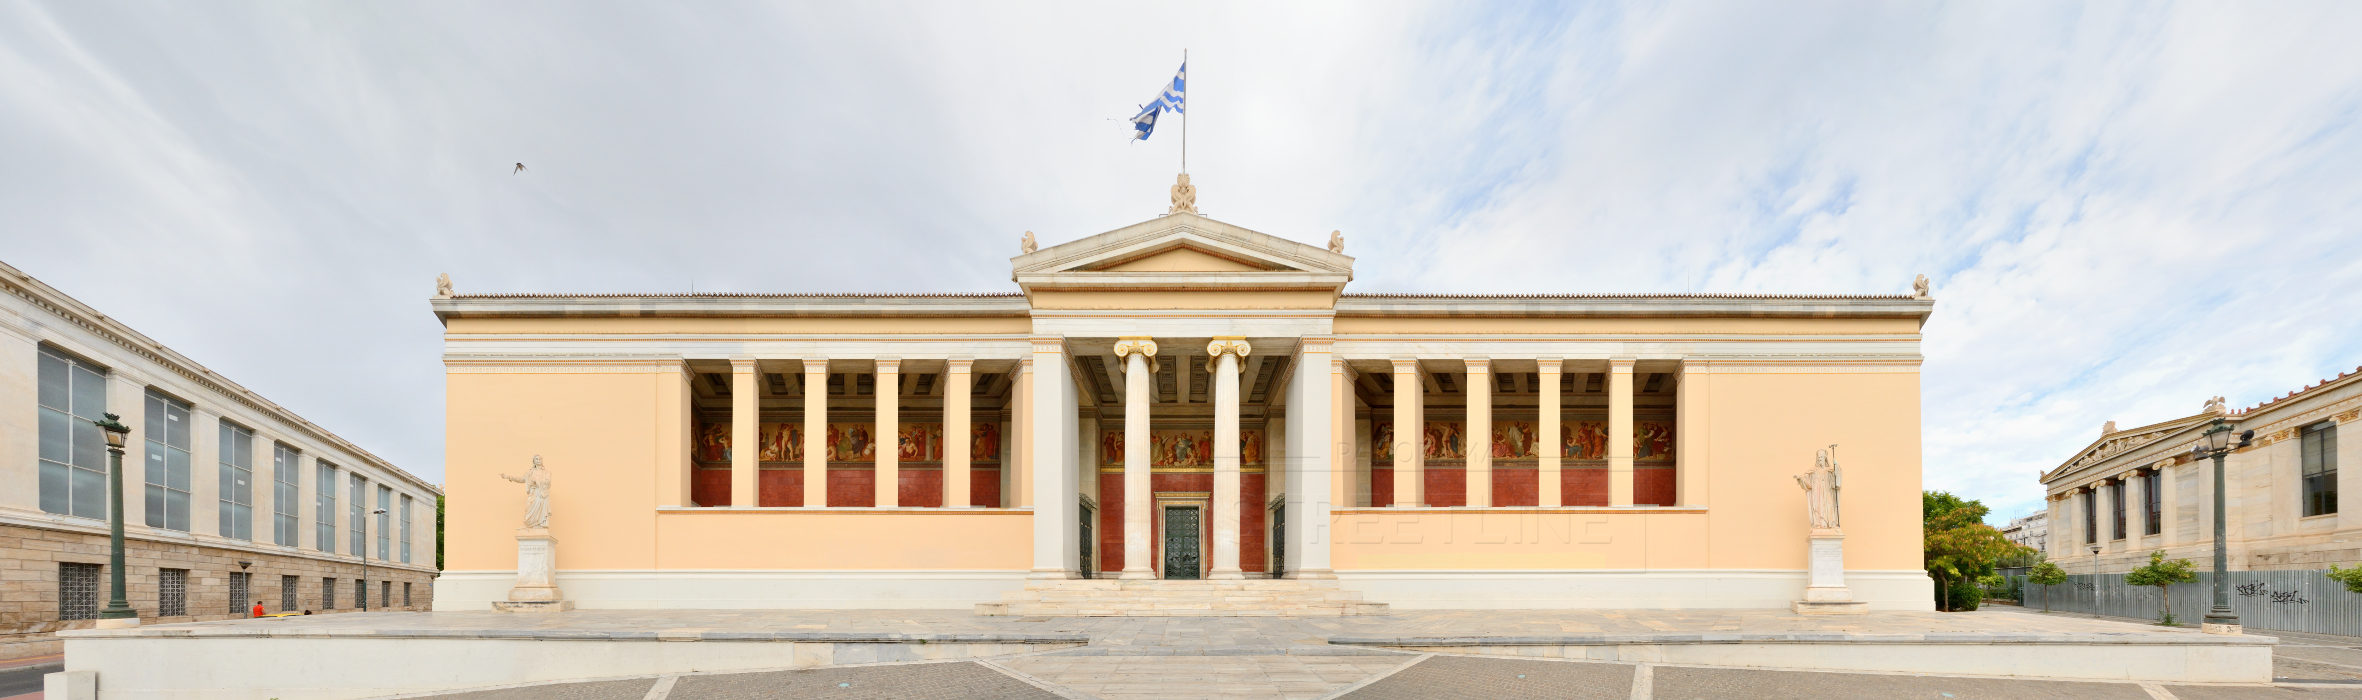 Universität Athen Fassade Panorama